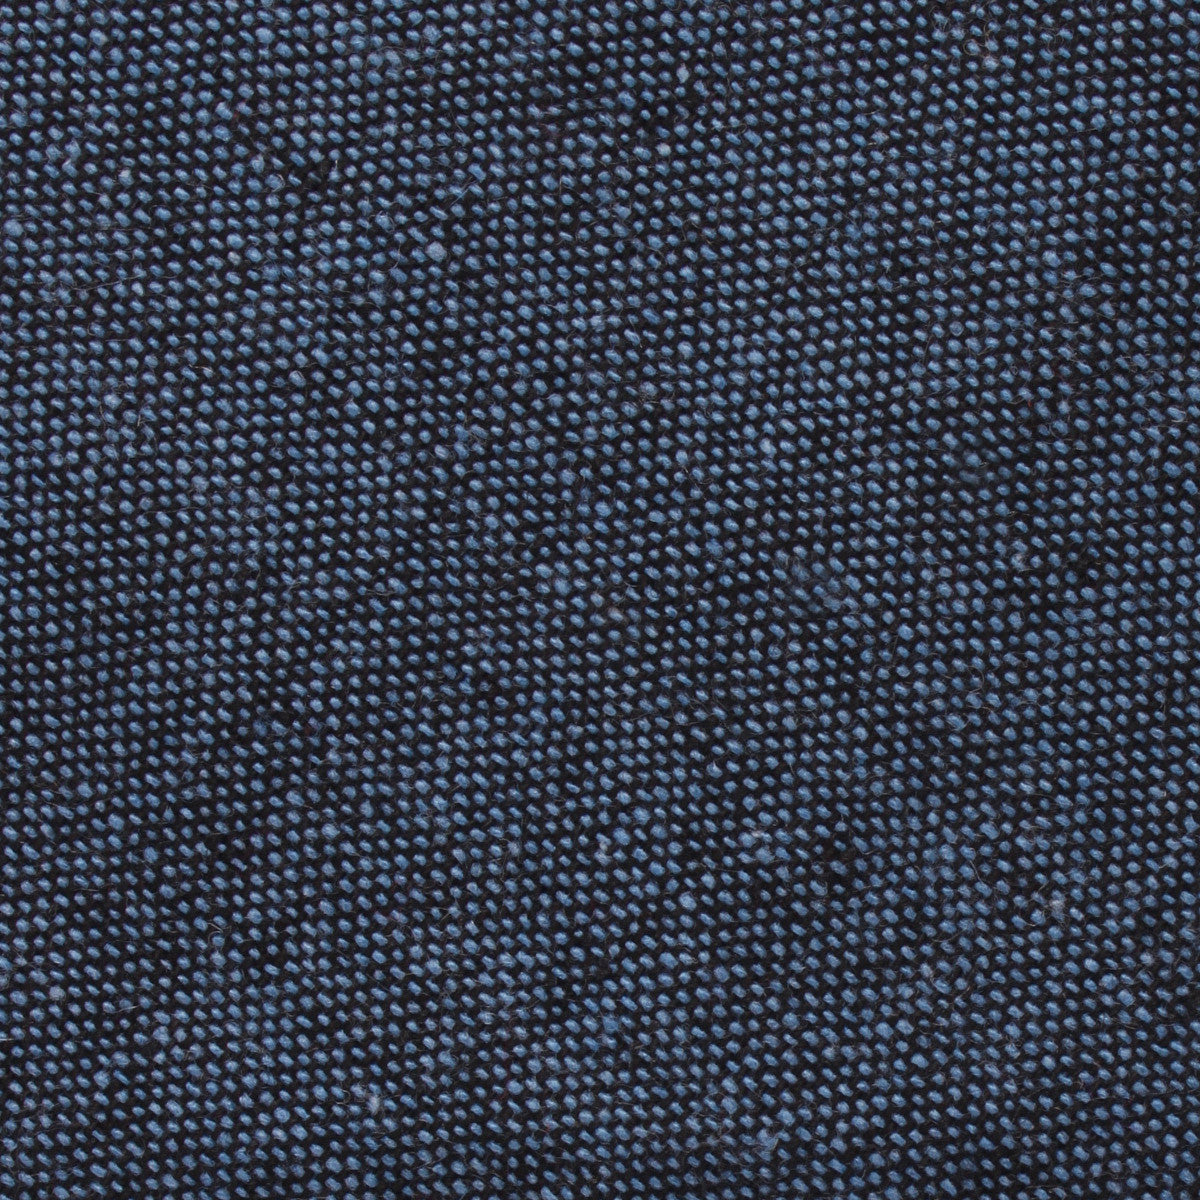 Blue & Black Textured Linen Blend Fabric Pocket Square